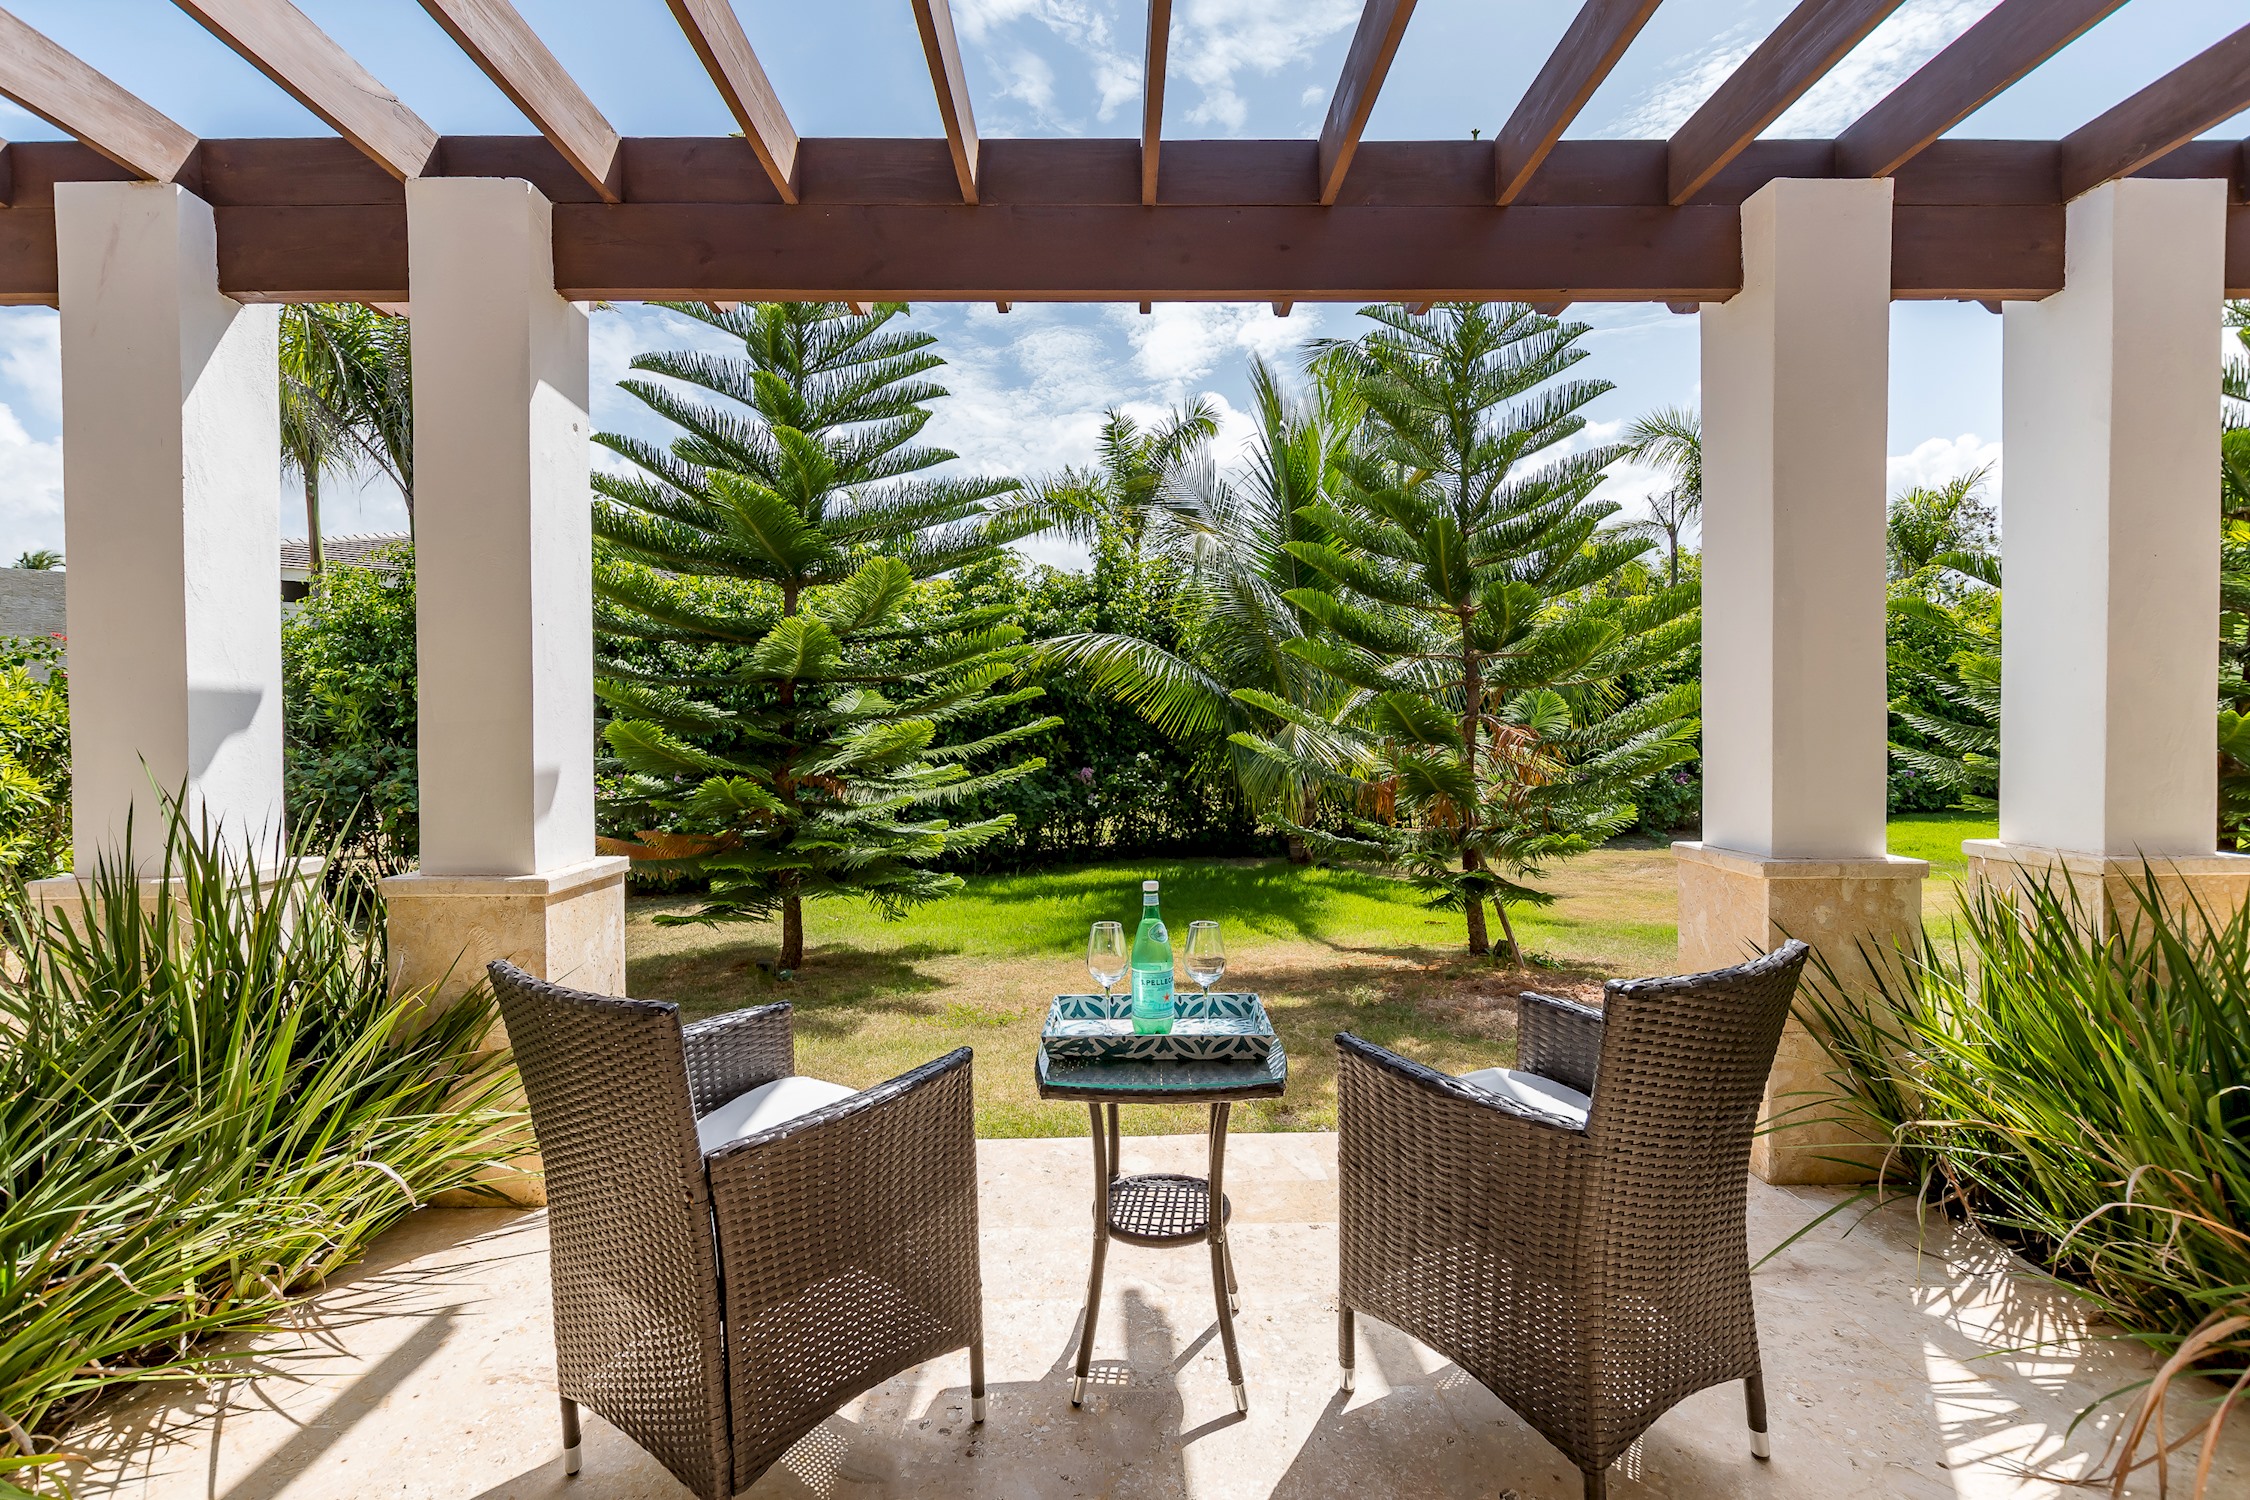 Luxurious 5-bdr villa at Casa de Campo – pool, jacuzzi, games, hibachi, staff 4